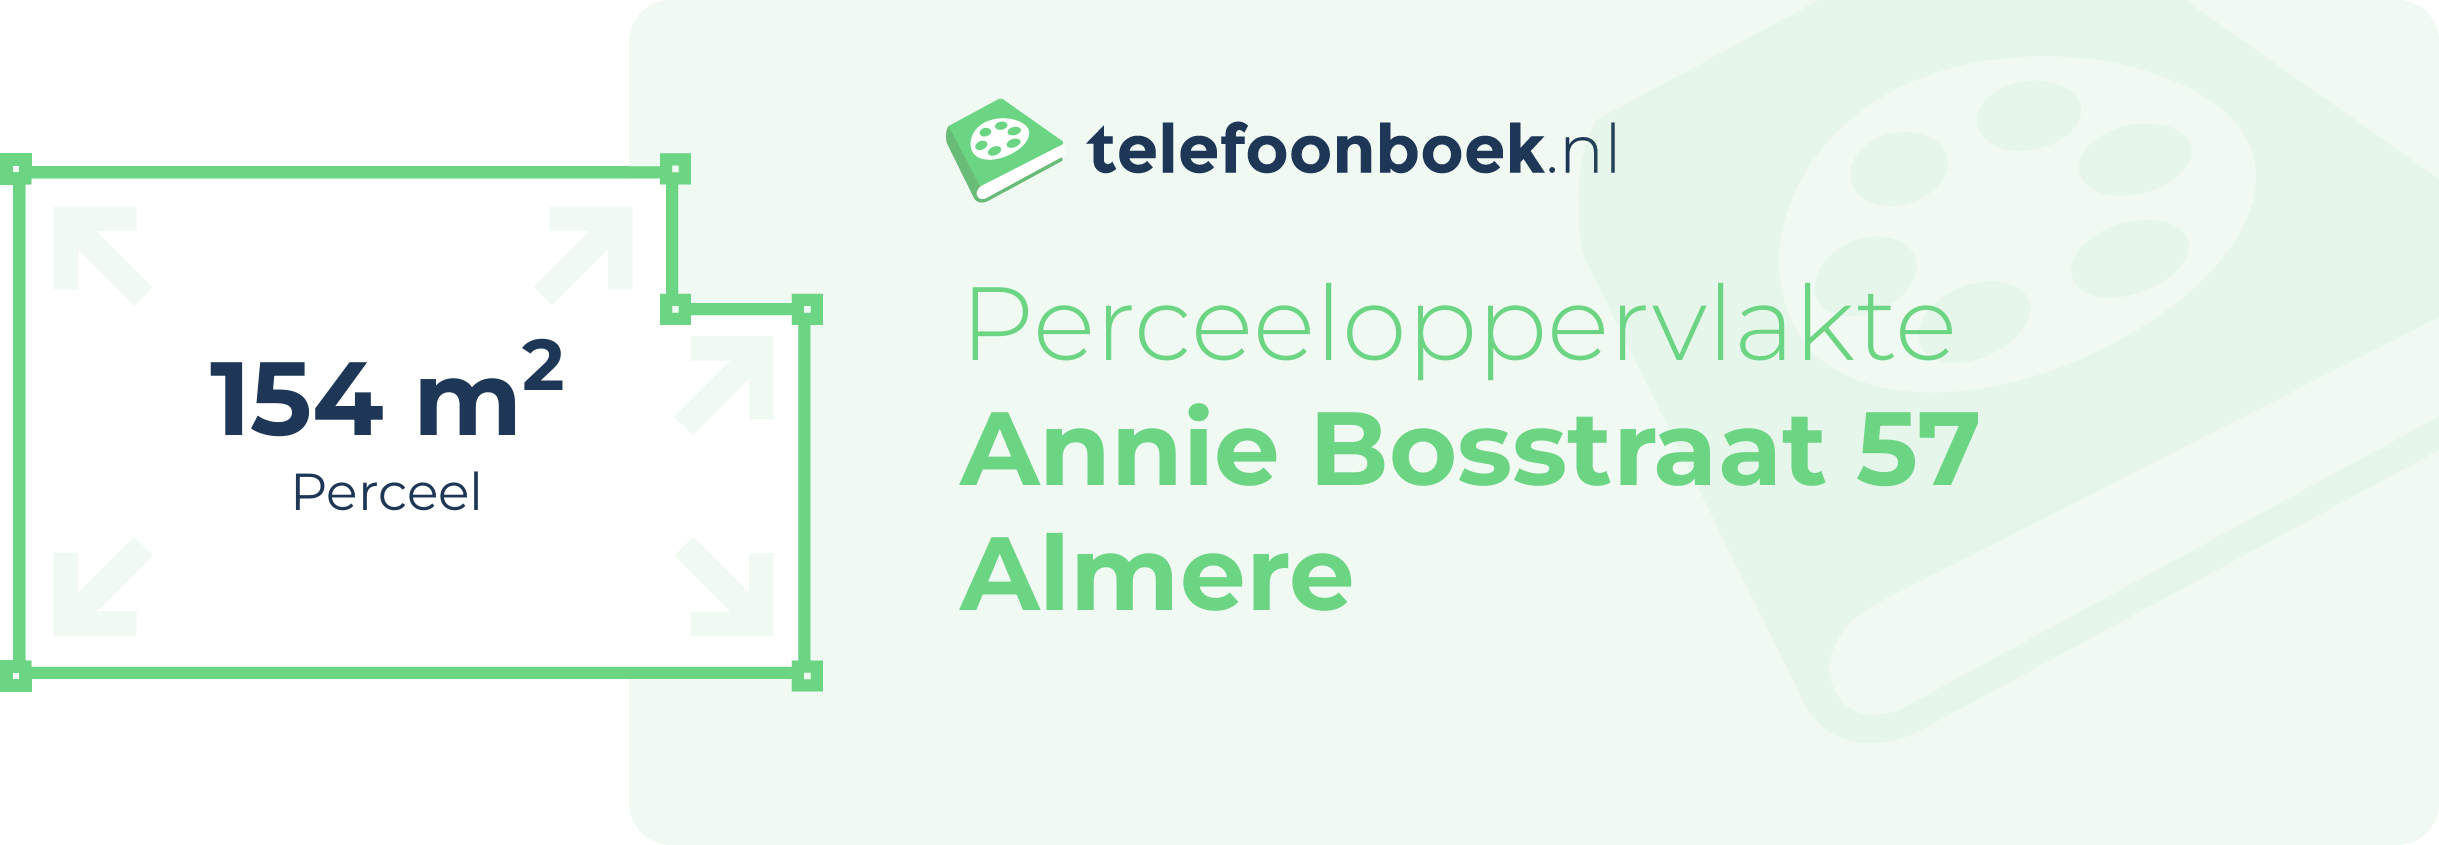 Perceeloppervlakte Annie Bosstraat 57 Almere